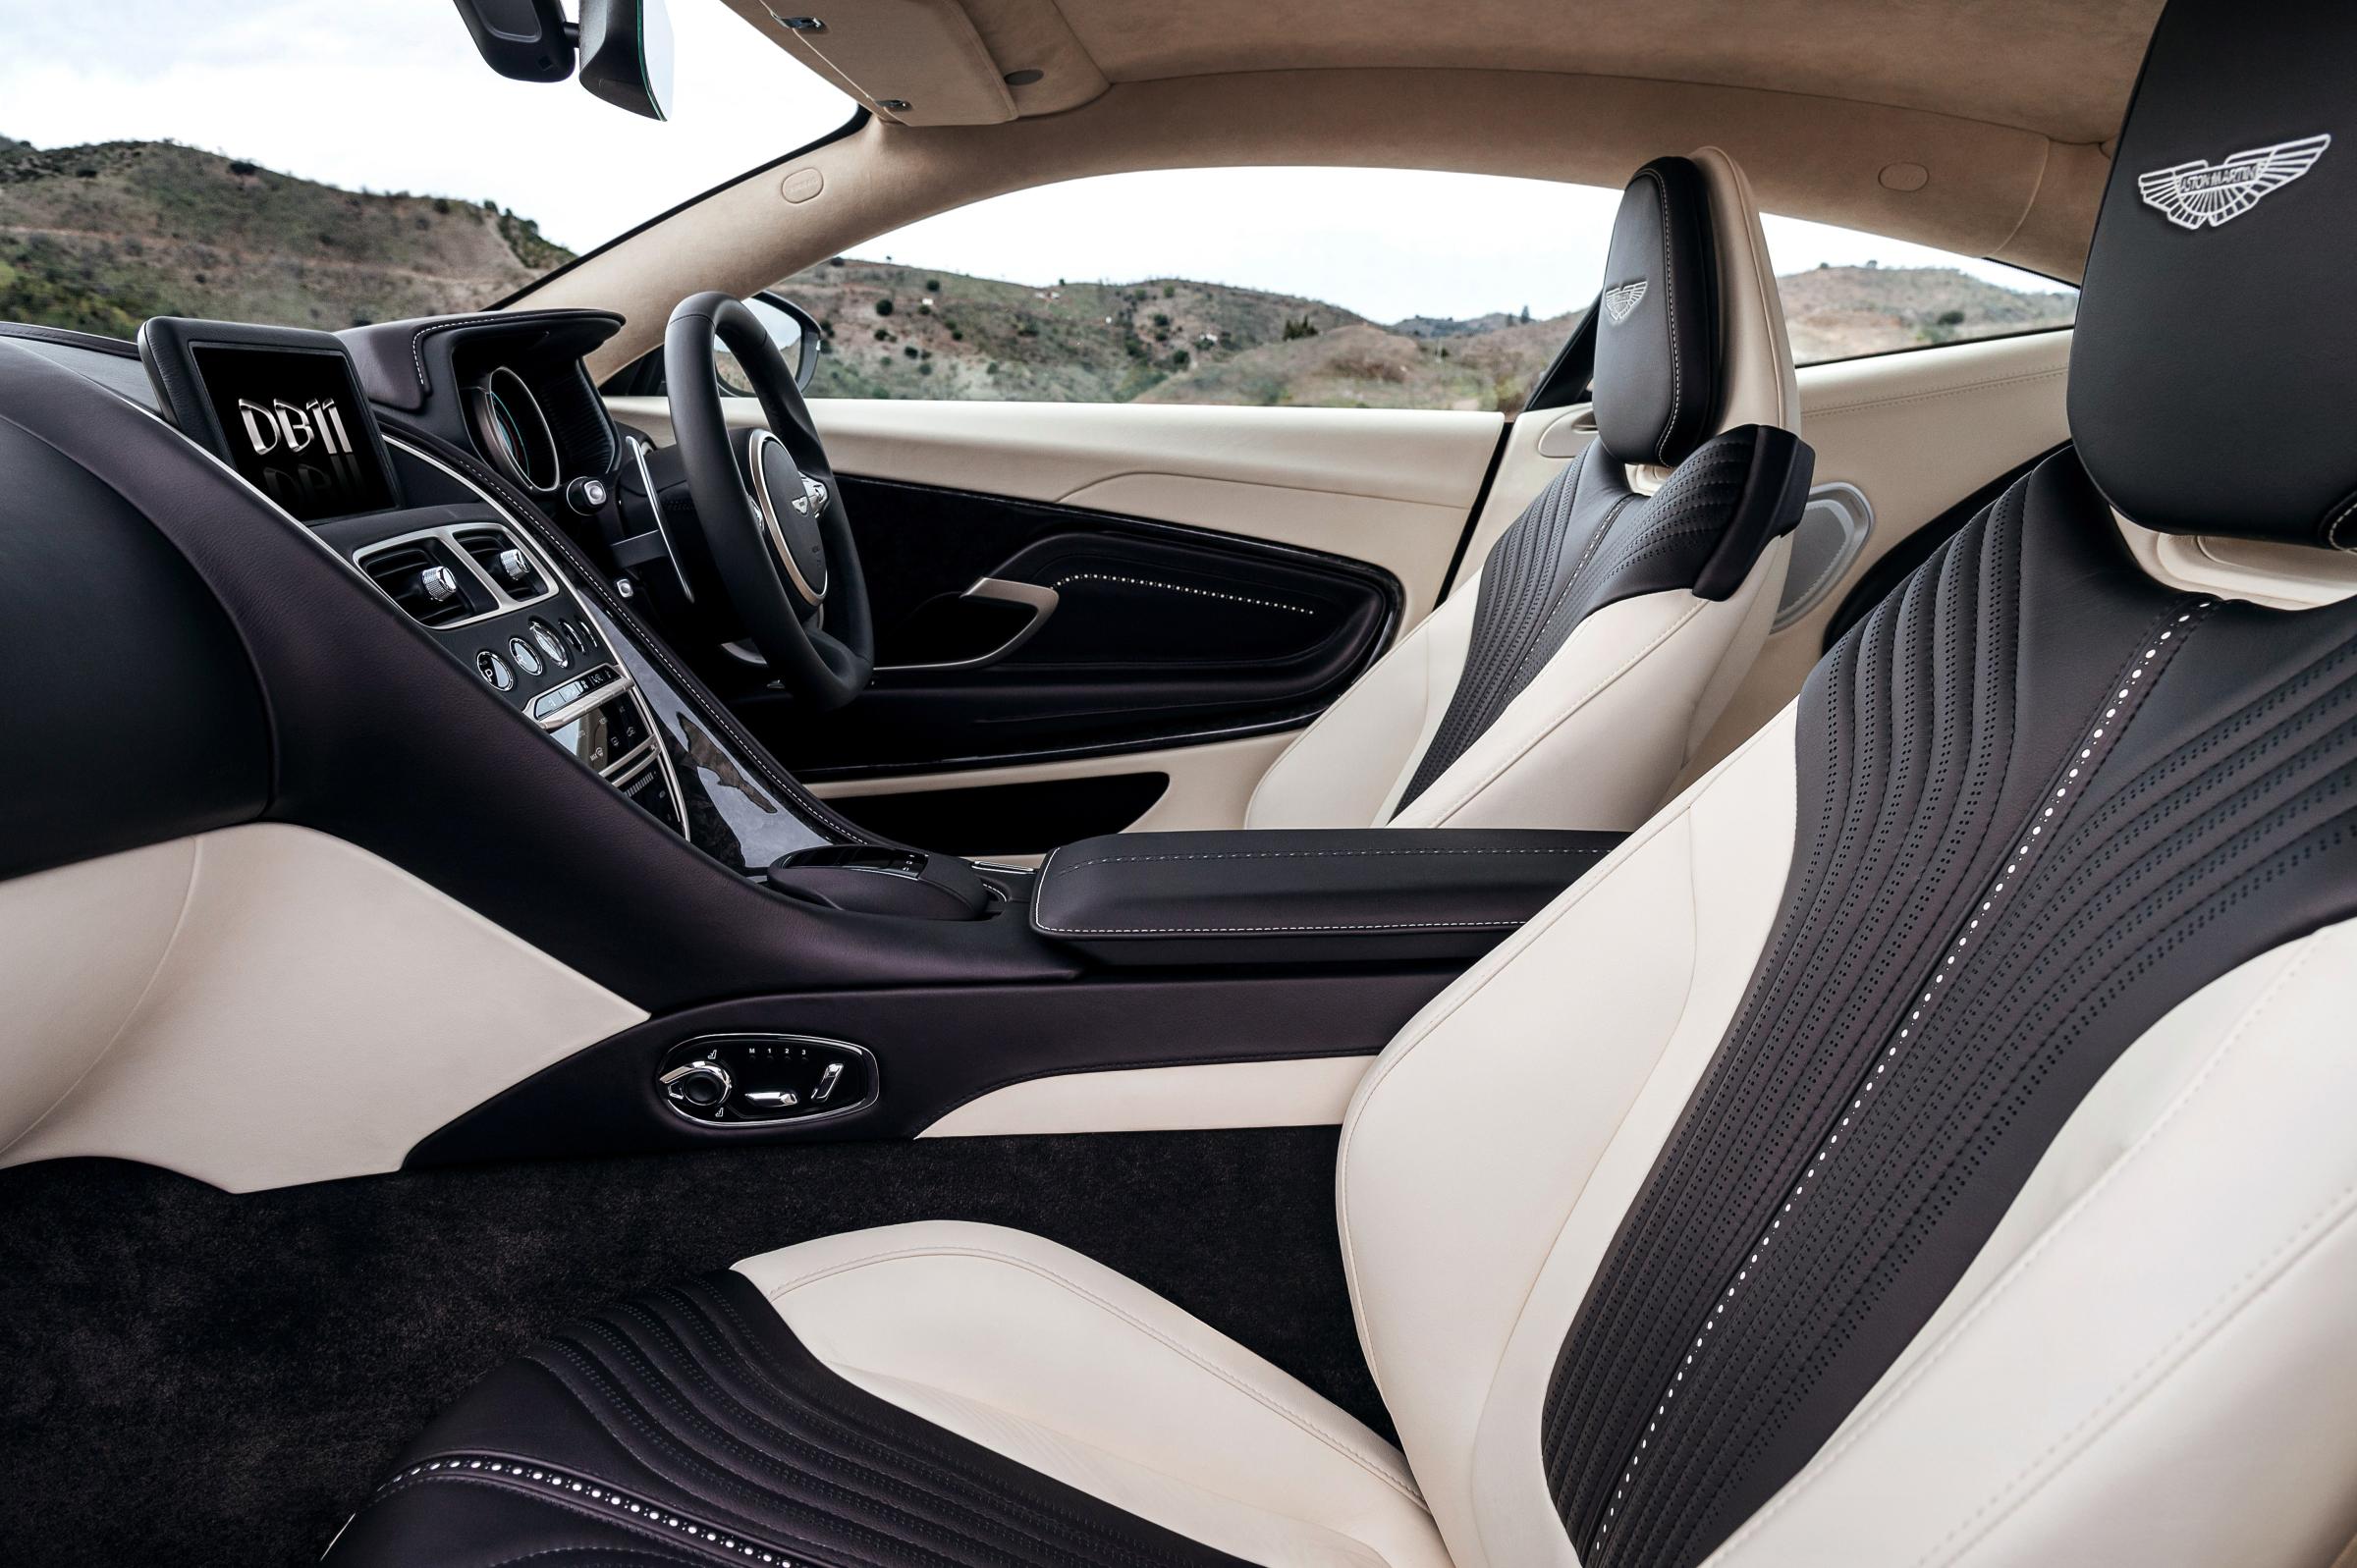 Aston Martin DB11 interior photo gallery